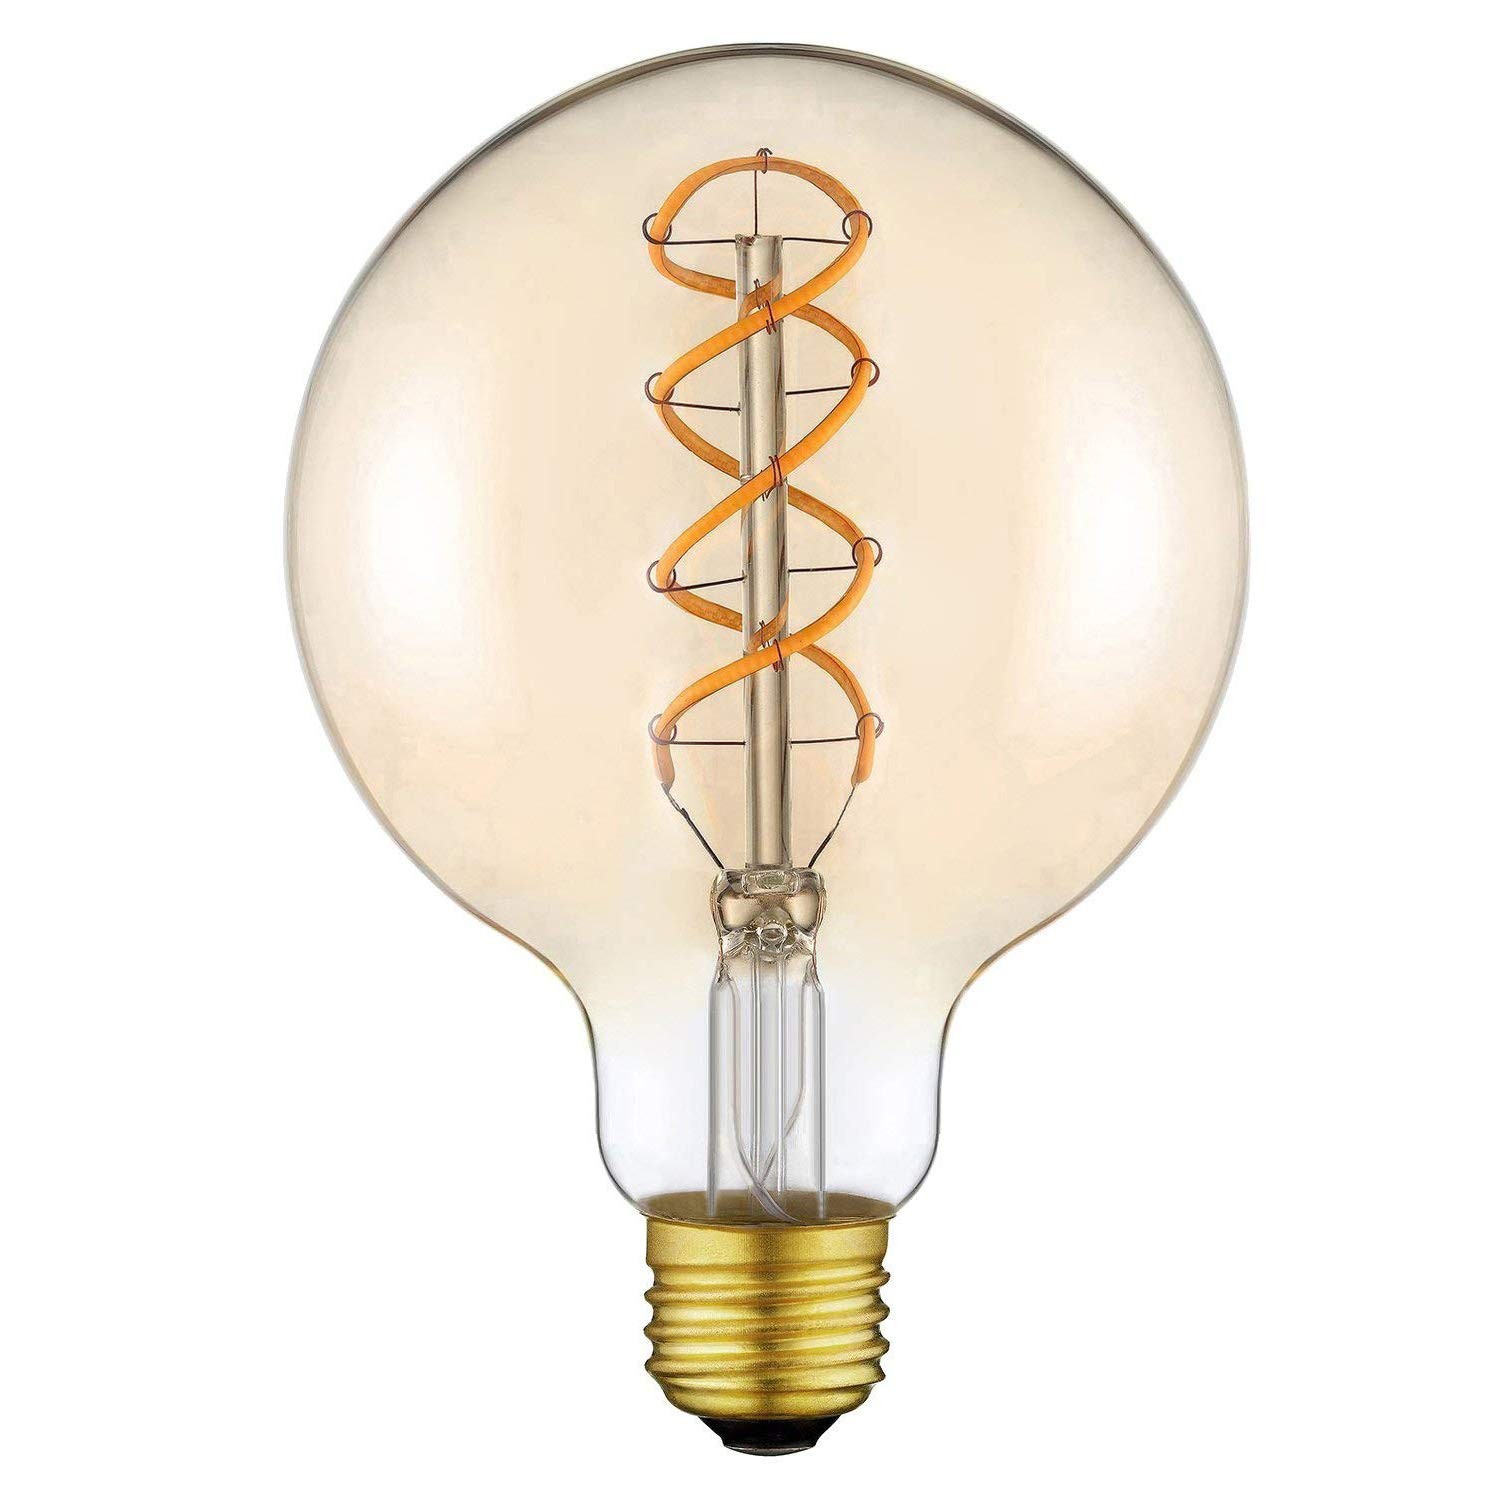 https://www.desineo.fr/5123/ampoule-vintage-%C3%A0-led-xxl-4w-e27-g125-style-edison-bulb.jpg